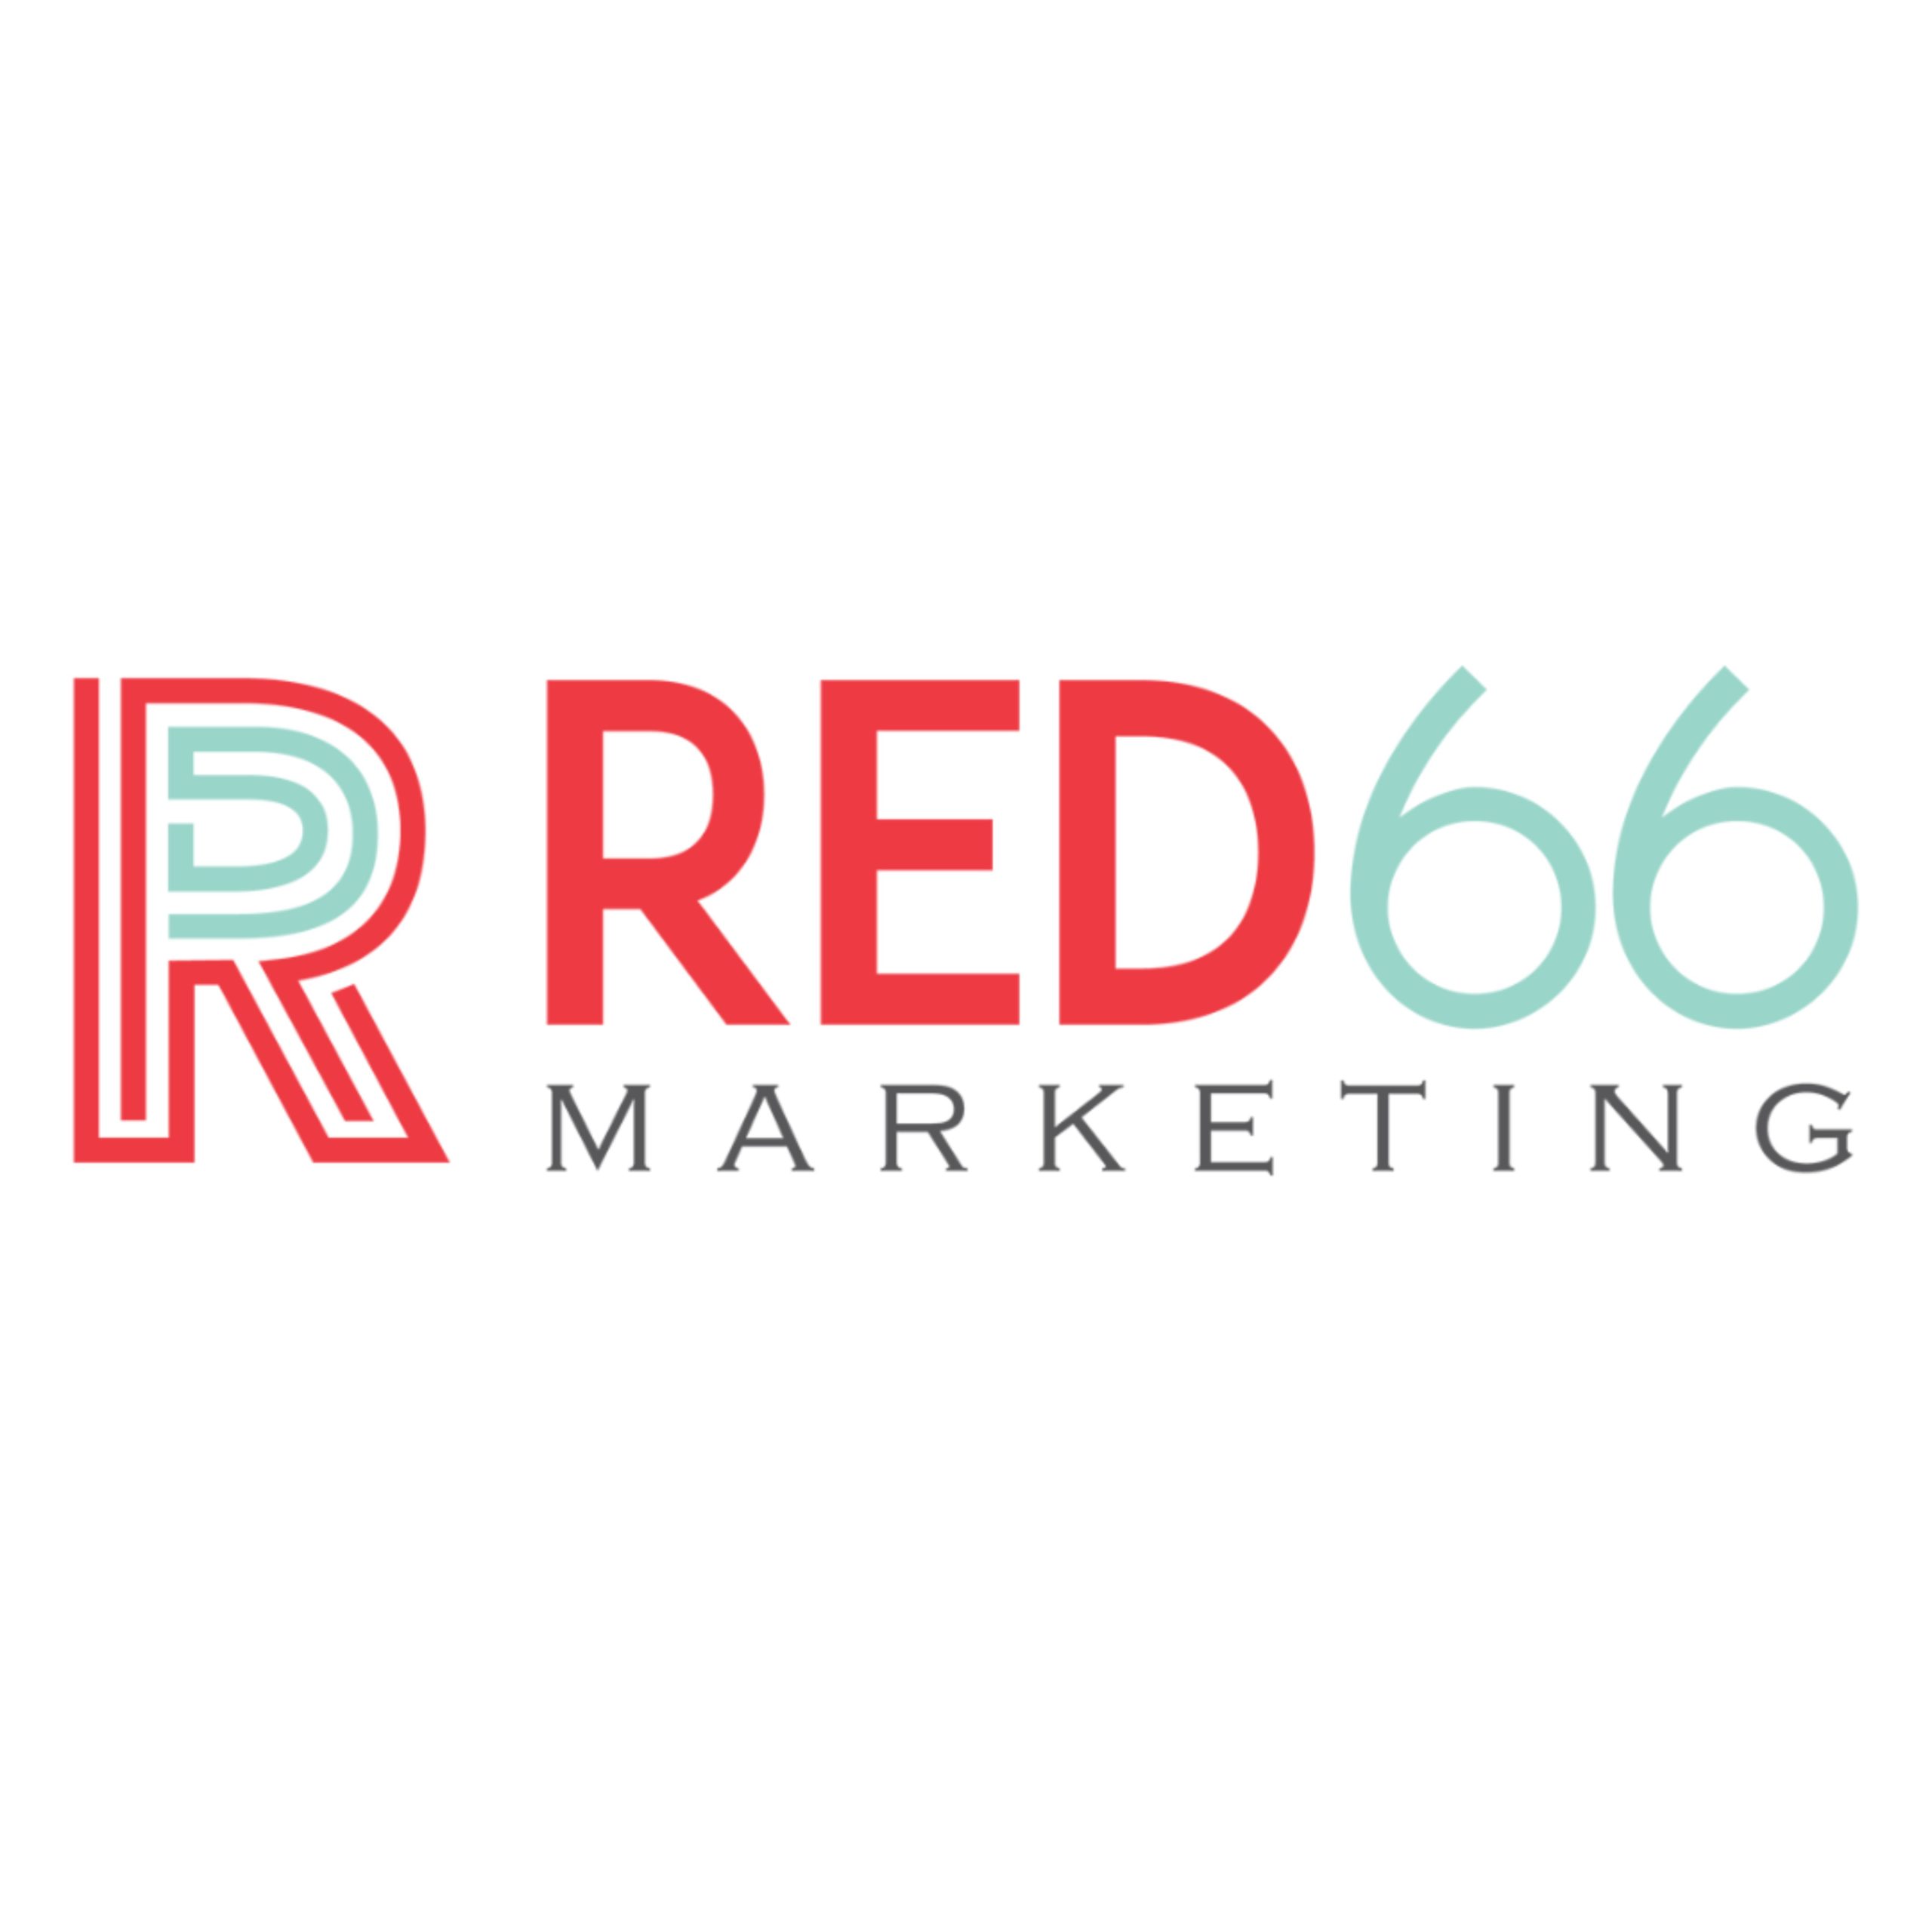 RED66 Marketing